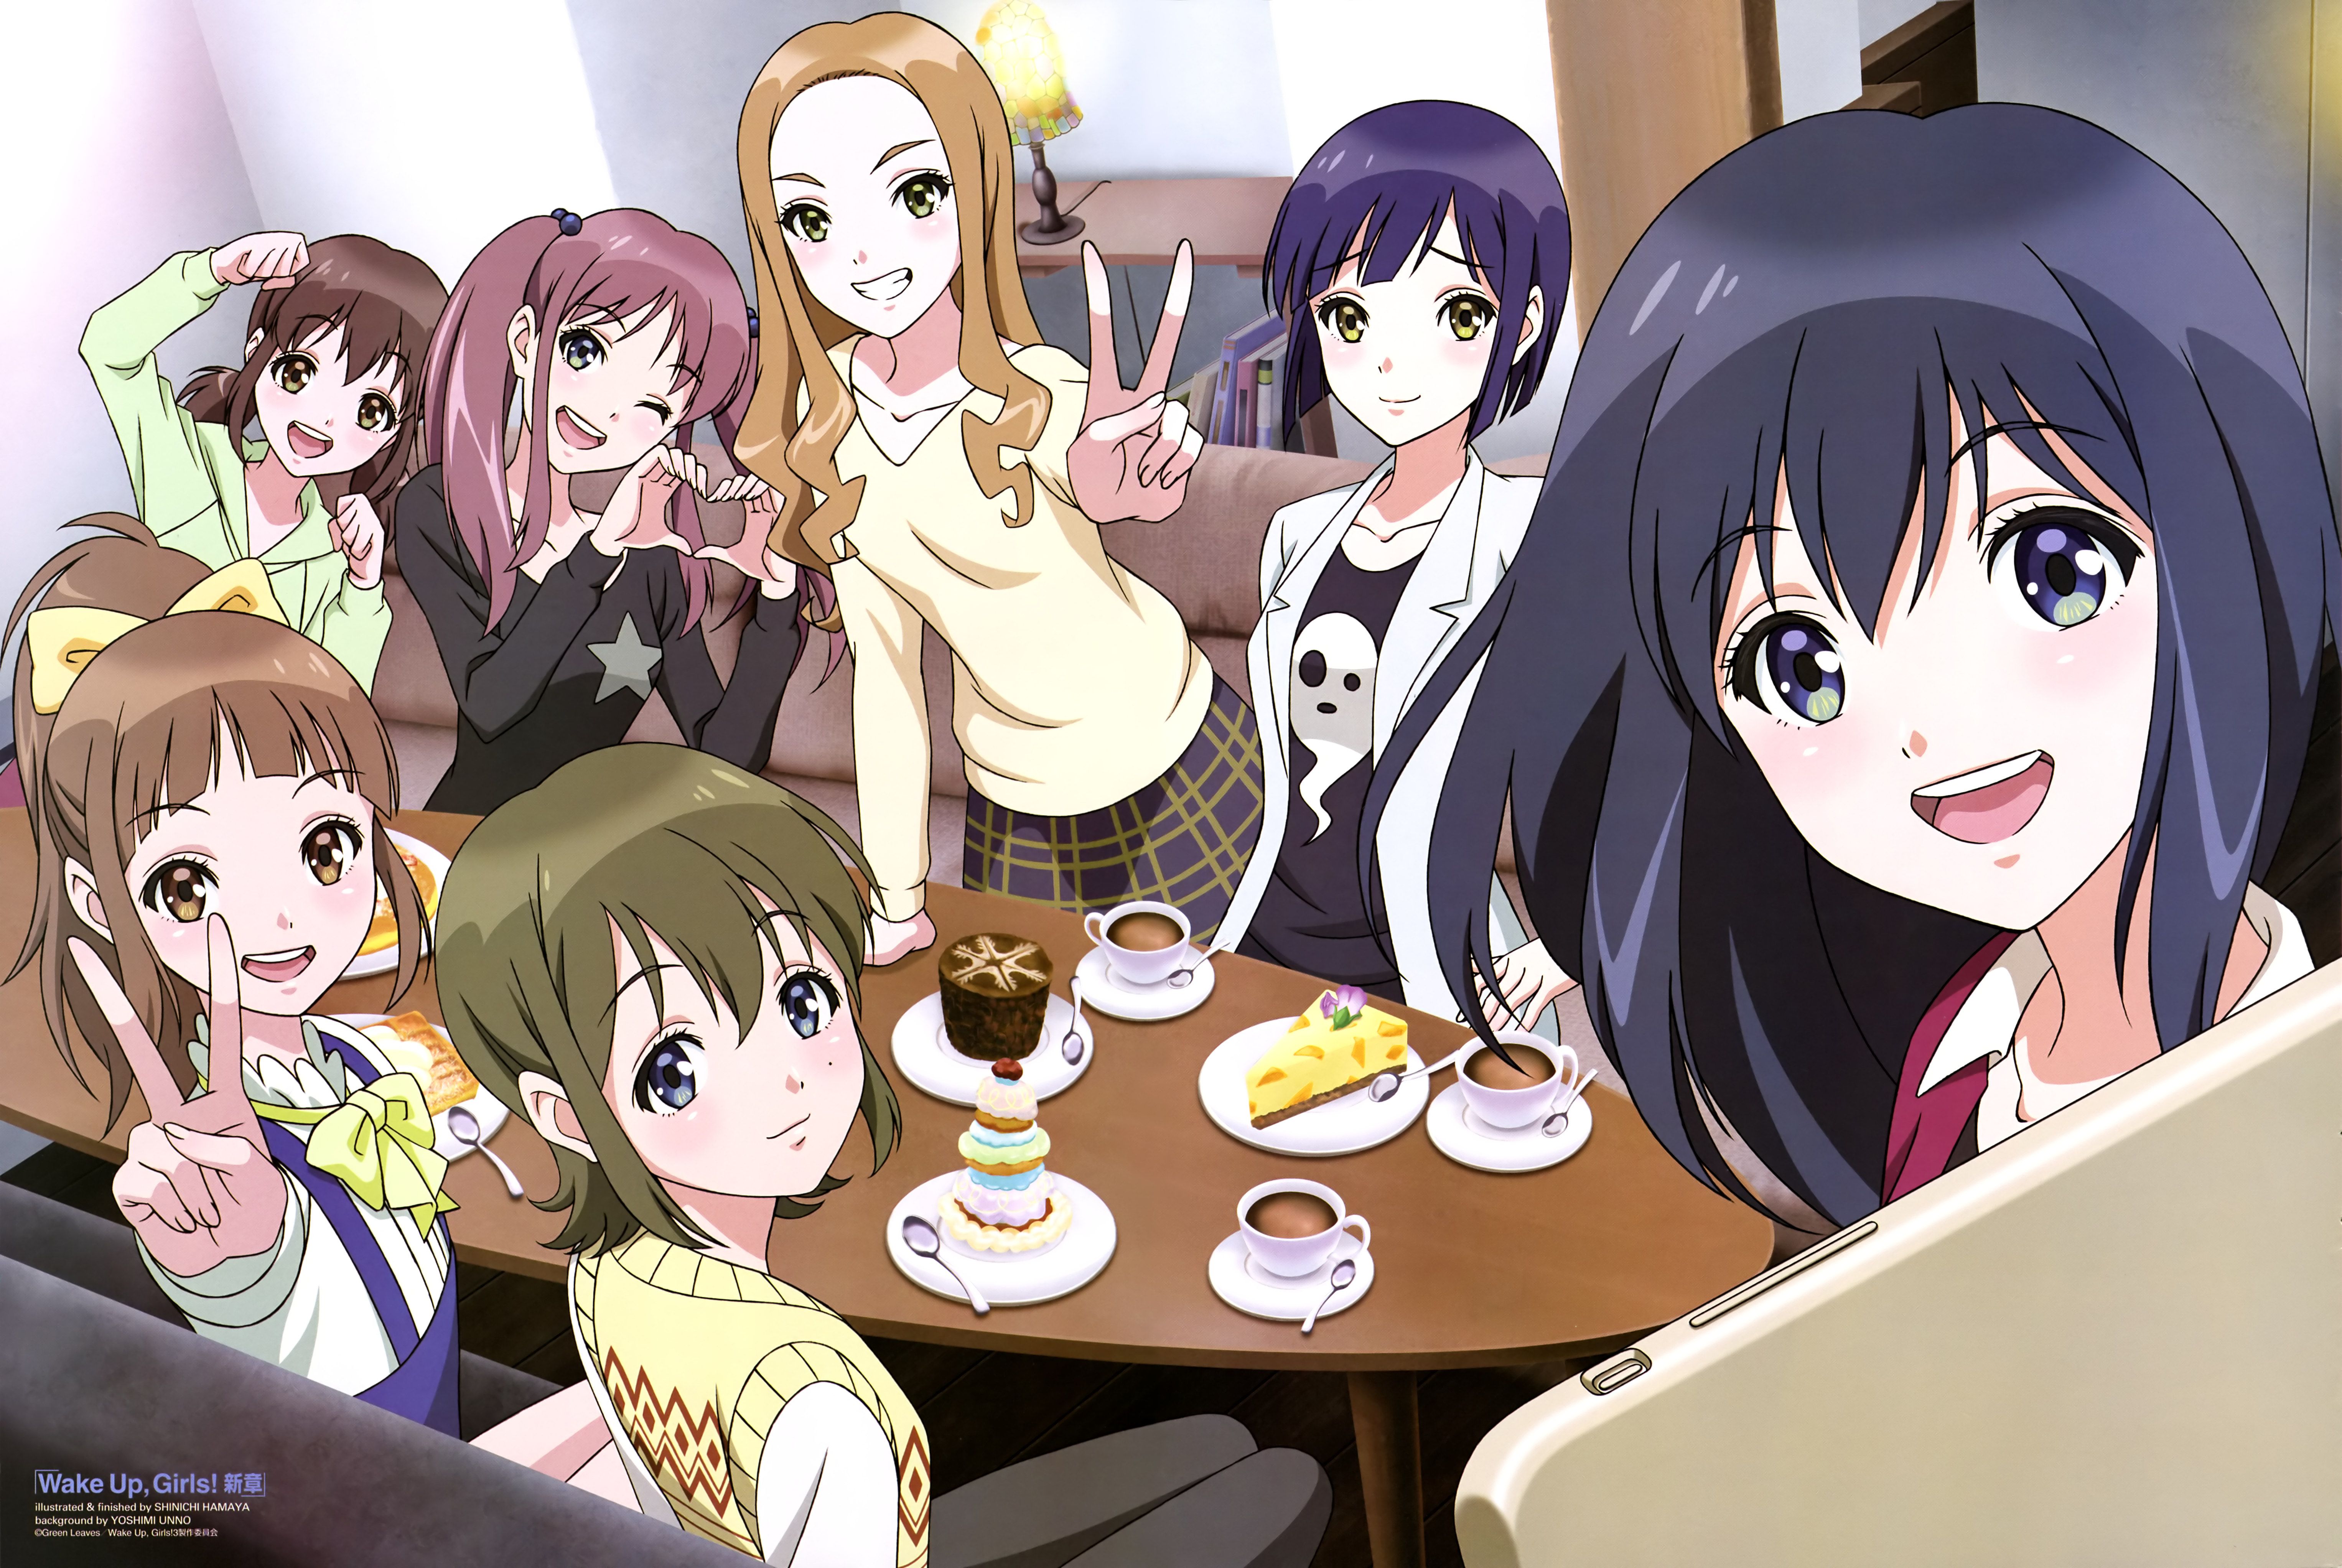 Anime Group Wallpaper